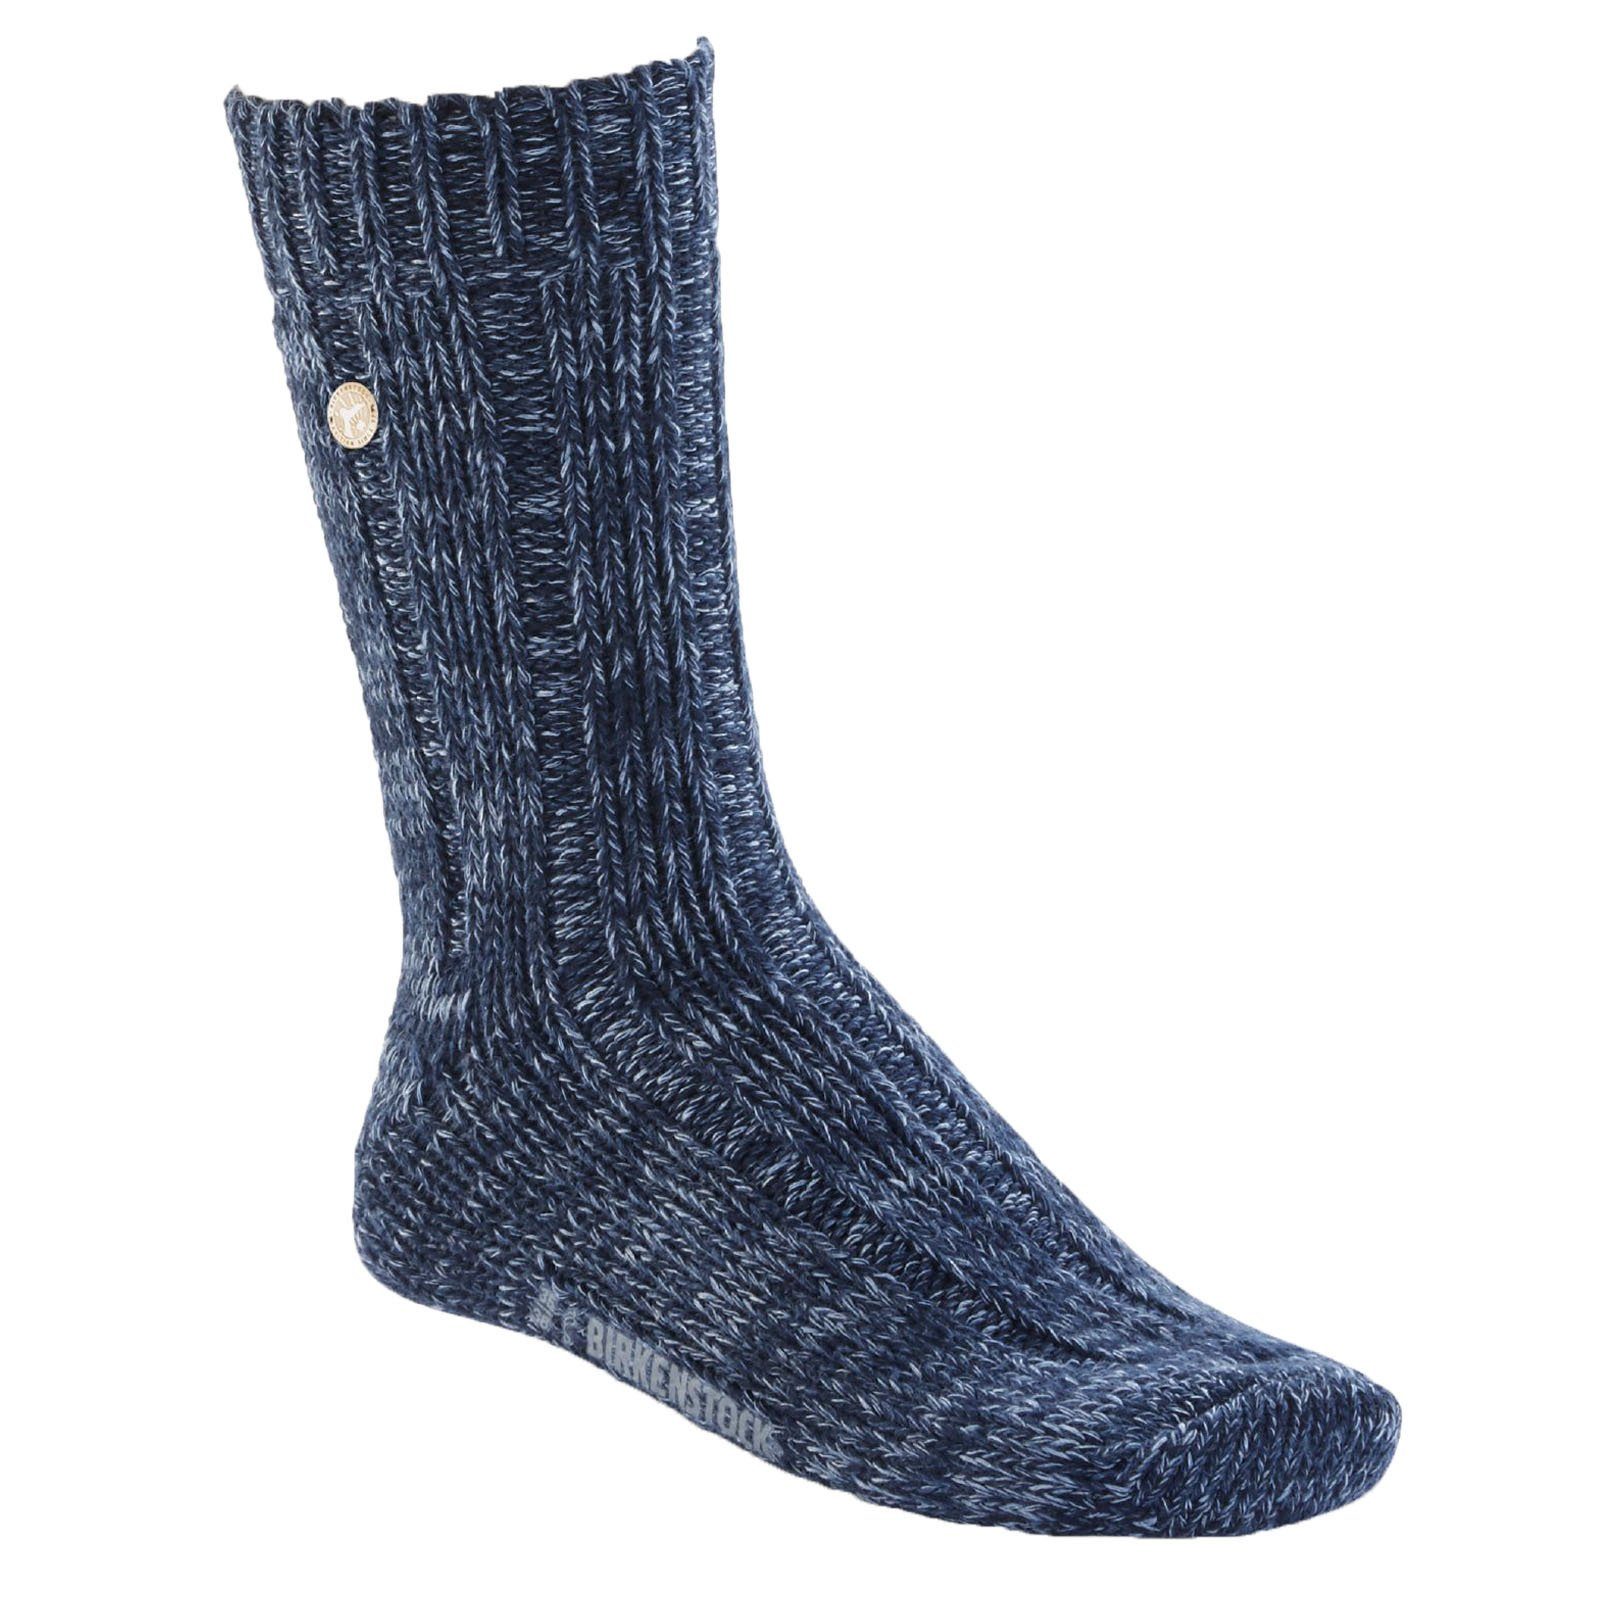 Birkenstock Kurzsocken Damen Blau Cotton Socken Twist - Strumpf